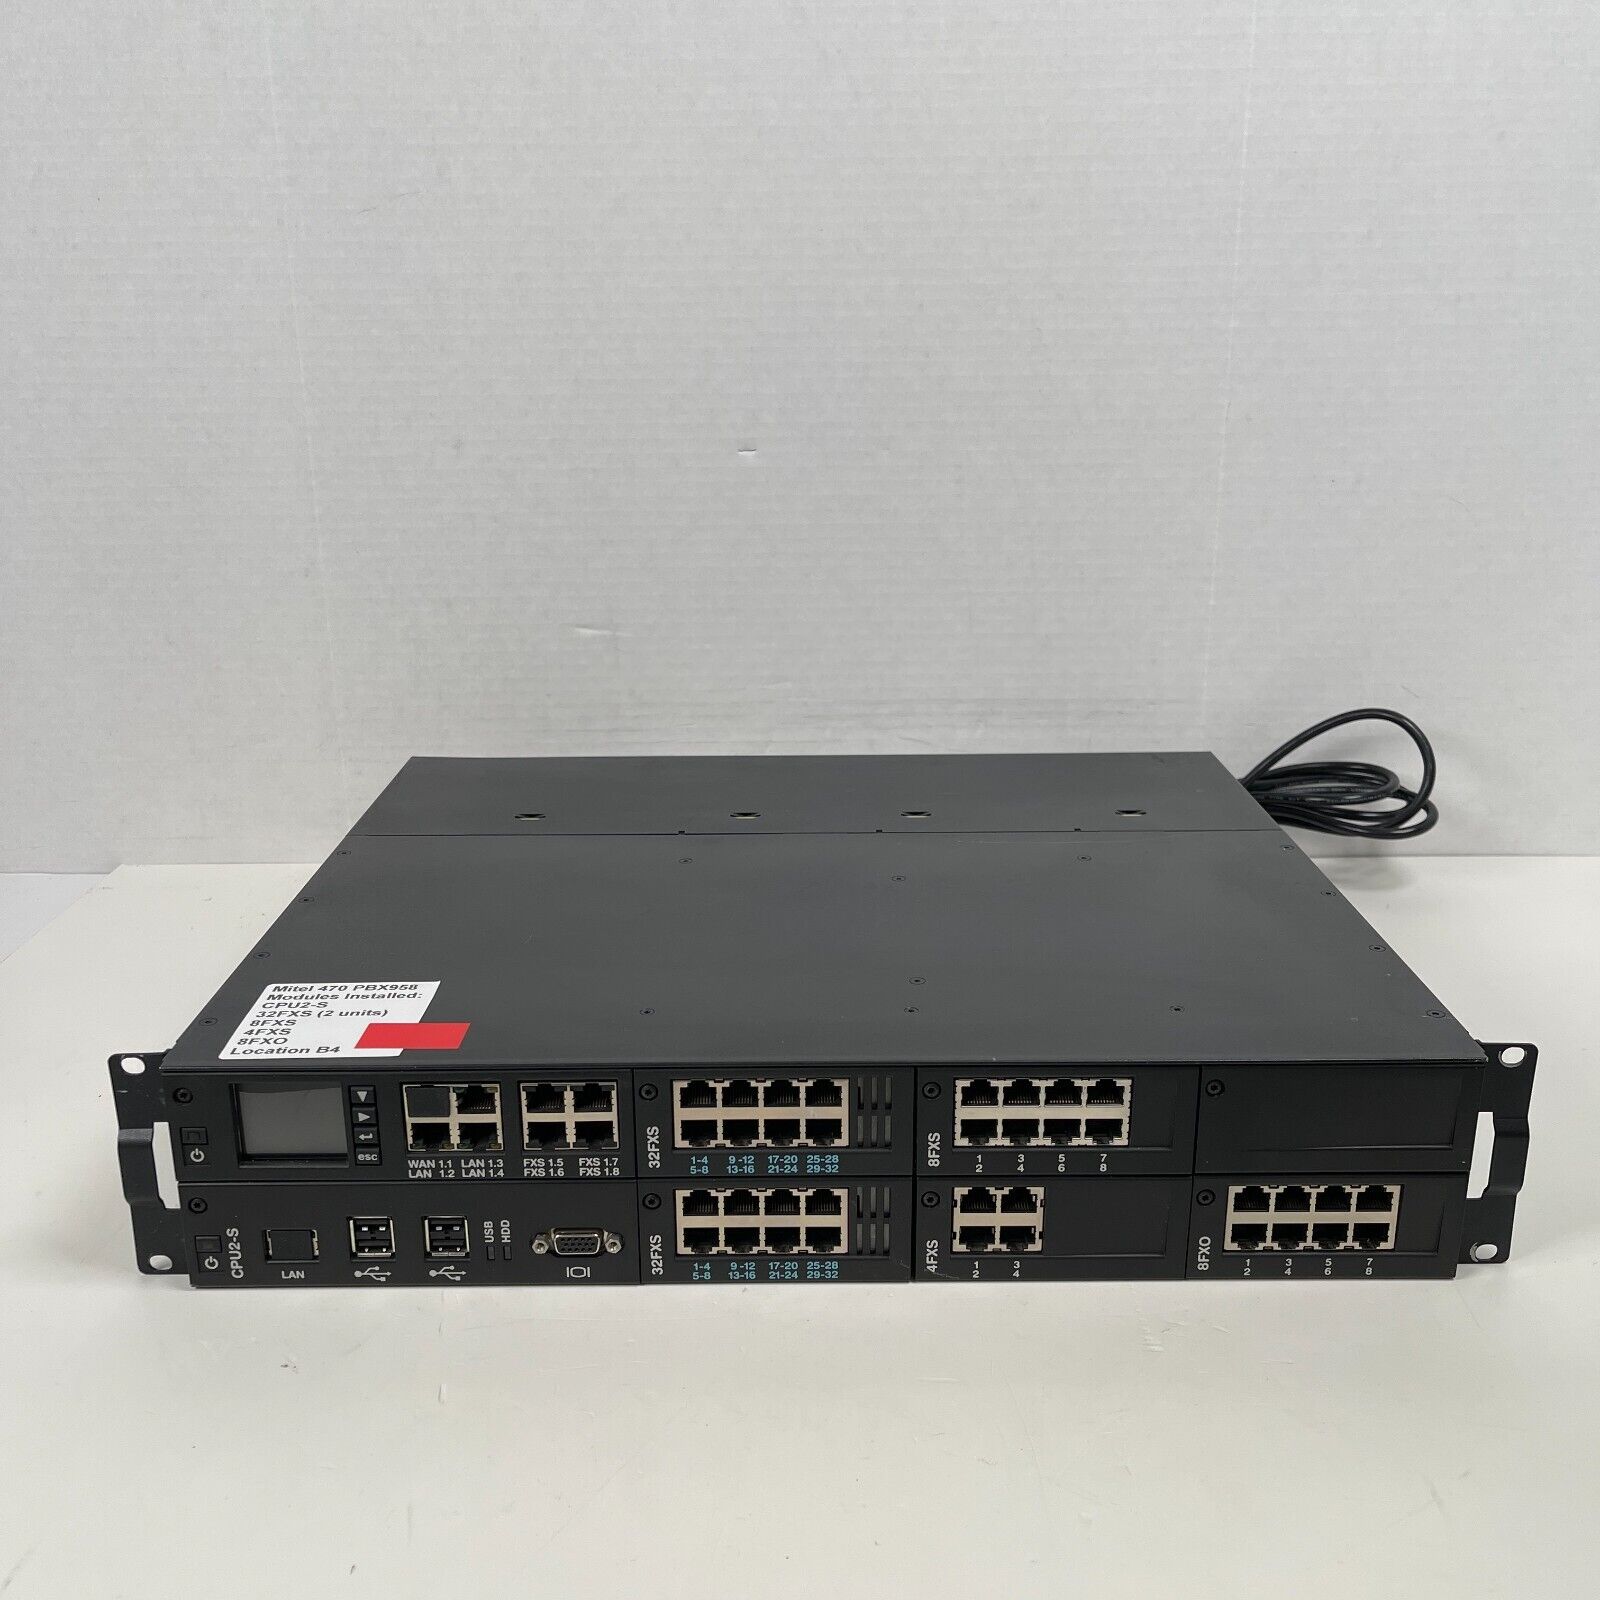 Mitel Mivoice 470 PBX958 Communication Server Controller w/ Modules USED